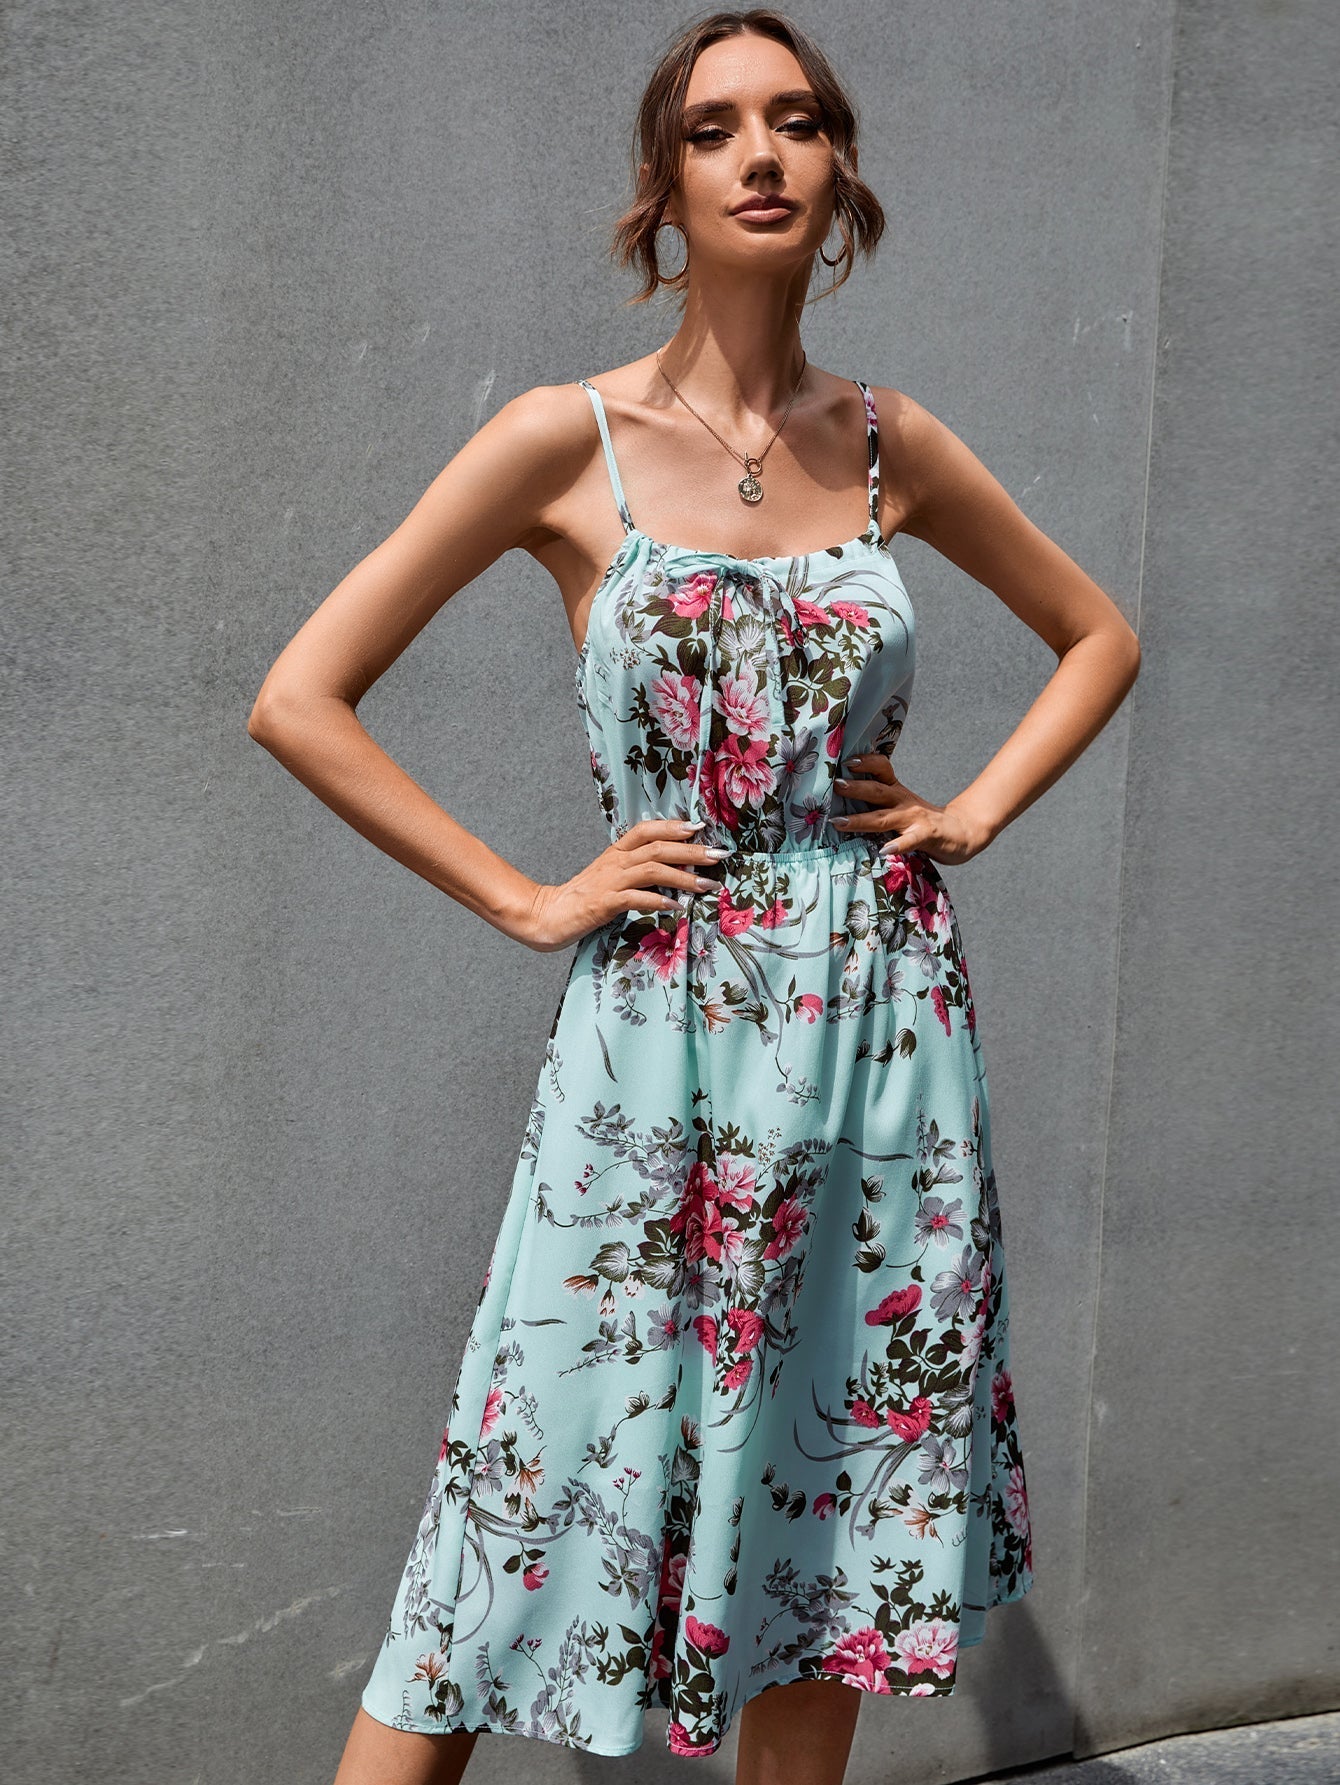 Floral Print Tie Front Dress Sai Feel